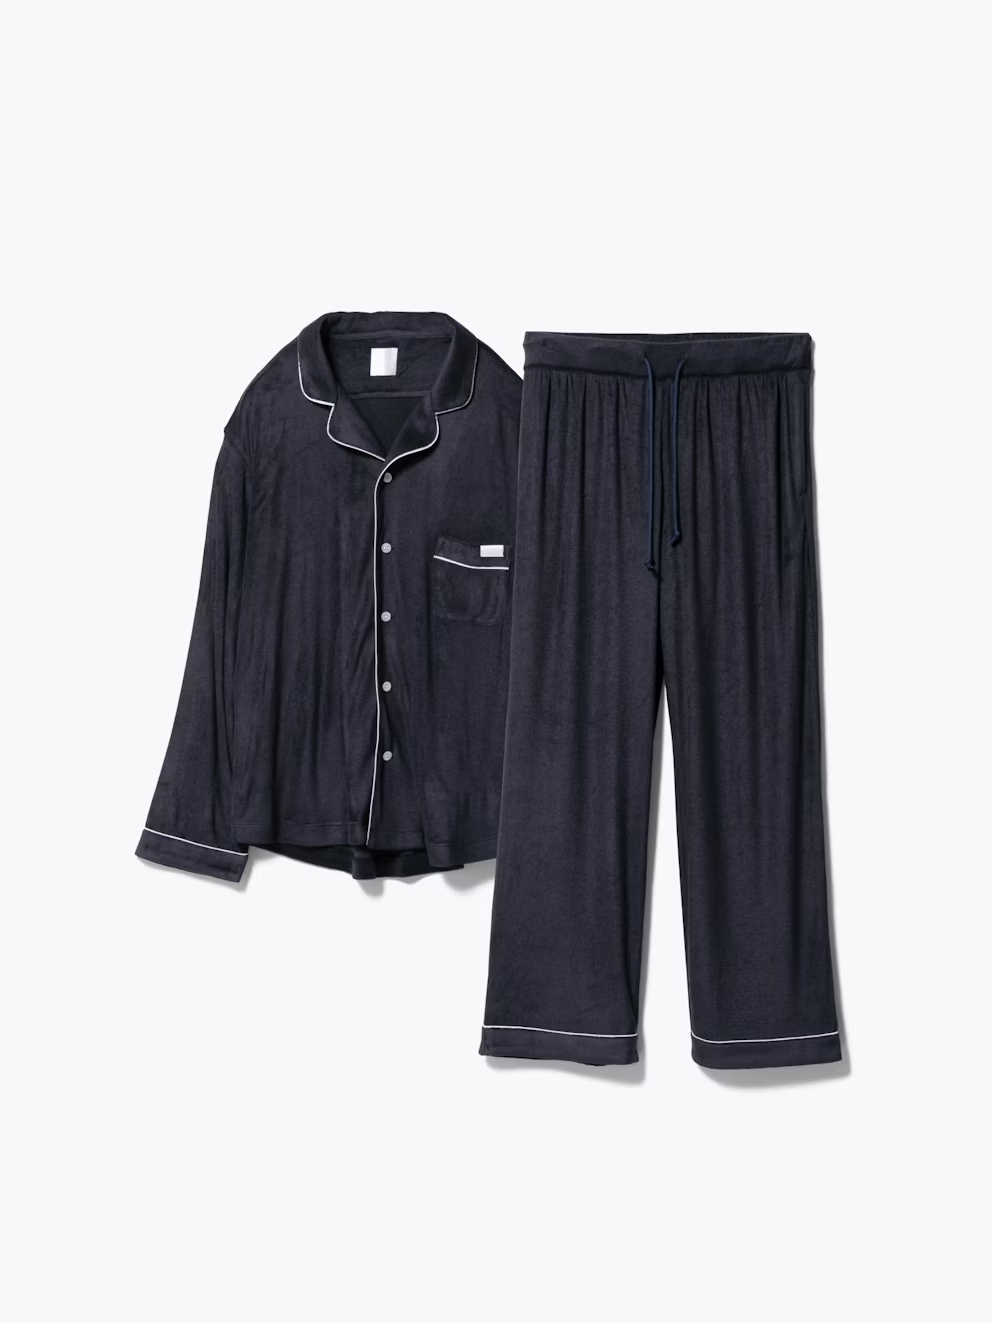 TENTIAL(テンシャル) BAKUNE Pajamas Premium Pile